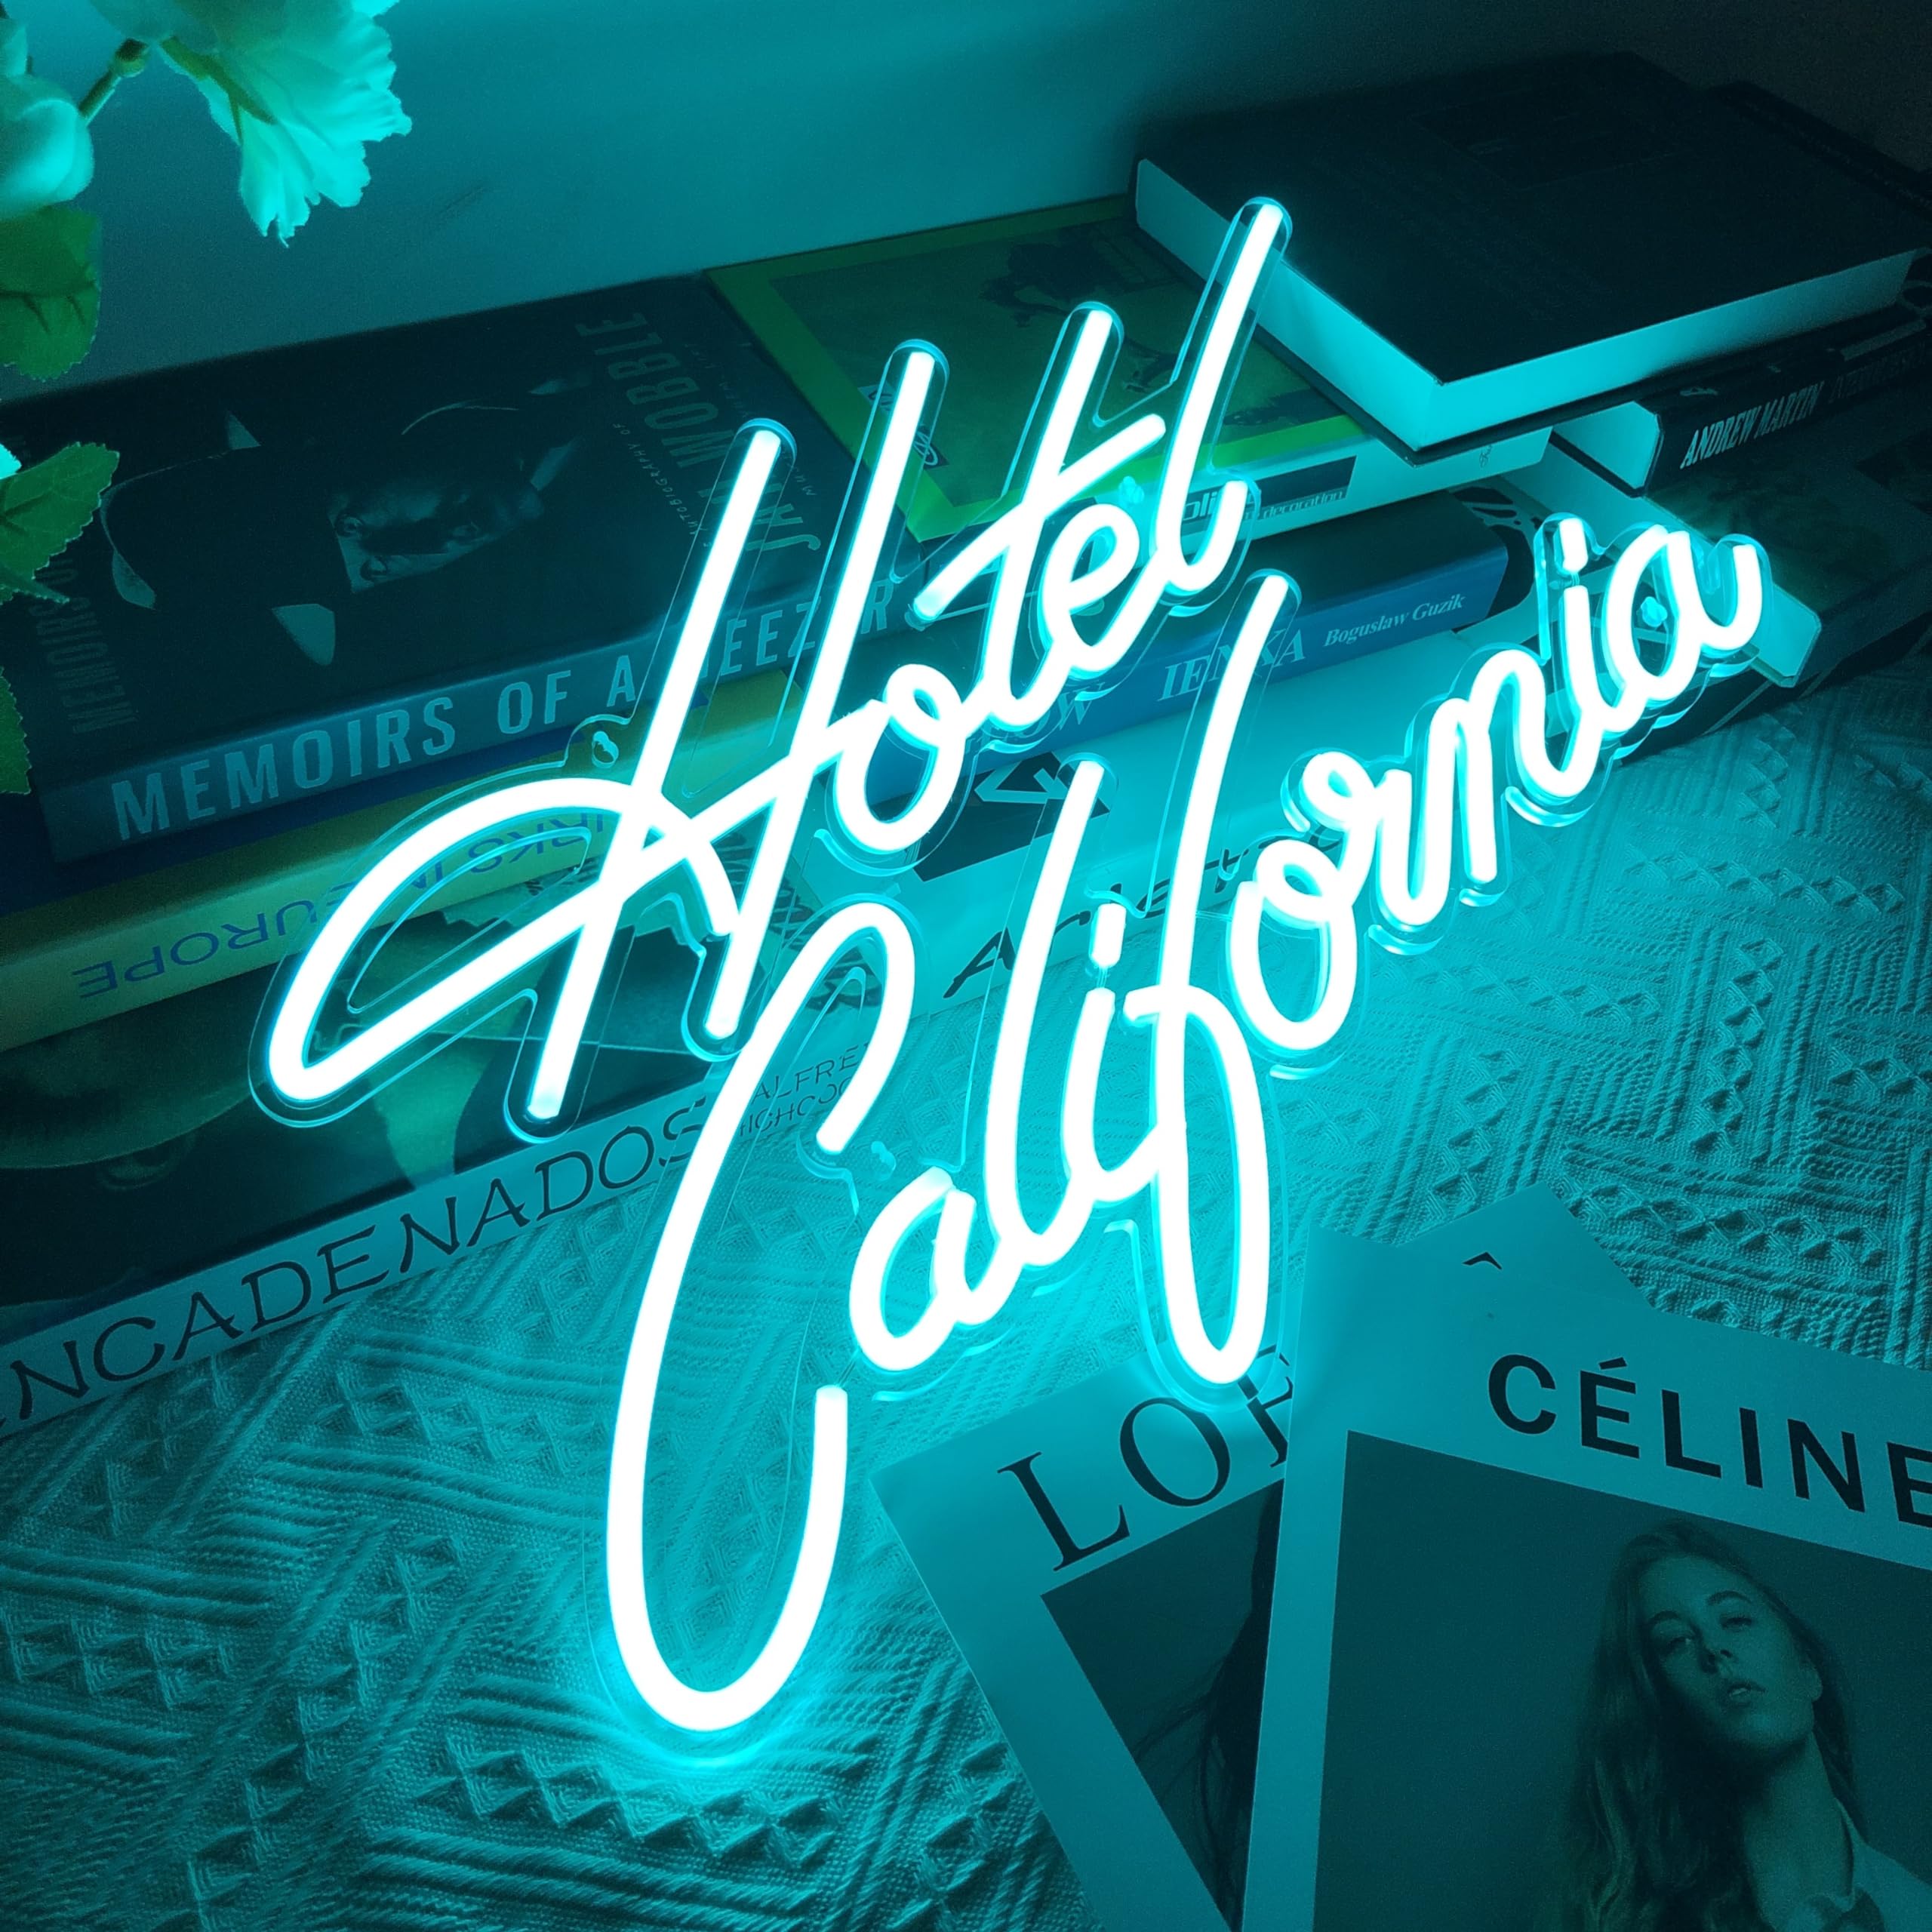 AOOS CUSTOM Hotel California Neon Signs for Wall Decor, Neon Lights for Bedroom Decor, Home Decor, Aesthetic Room Decor, Wedding Decor, Party Lights, Bathroom Decor, Kitchen Décor